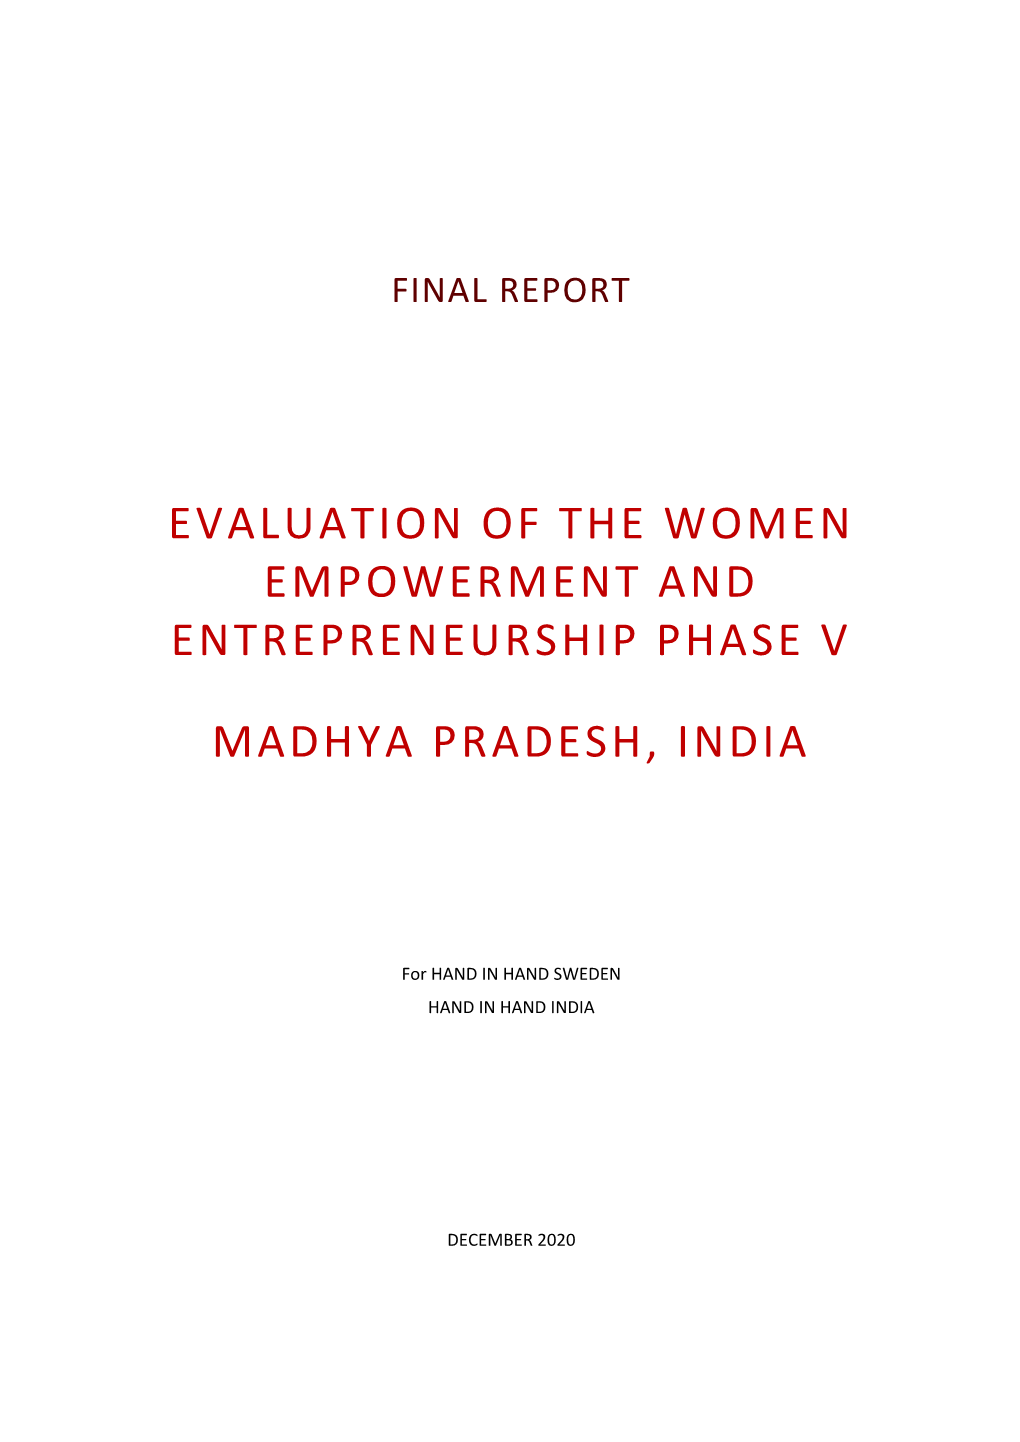 WEE Madhya Pradesh Evaluation Final Report Hihindia